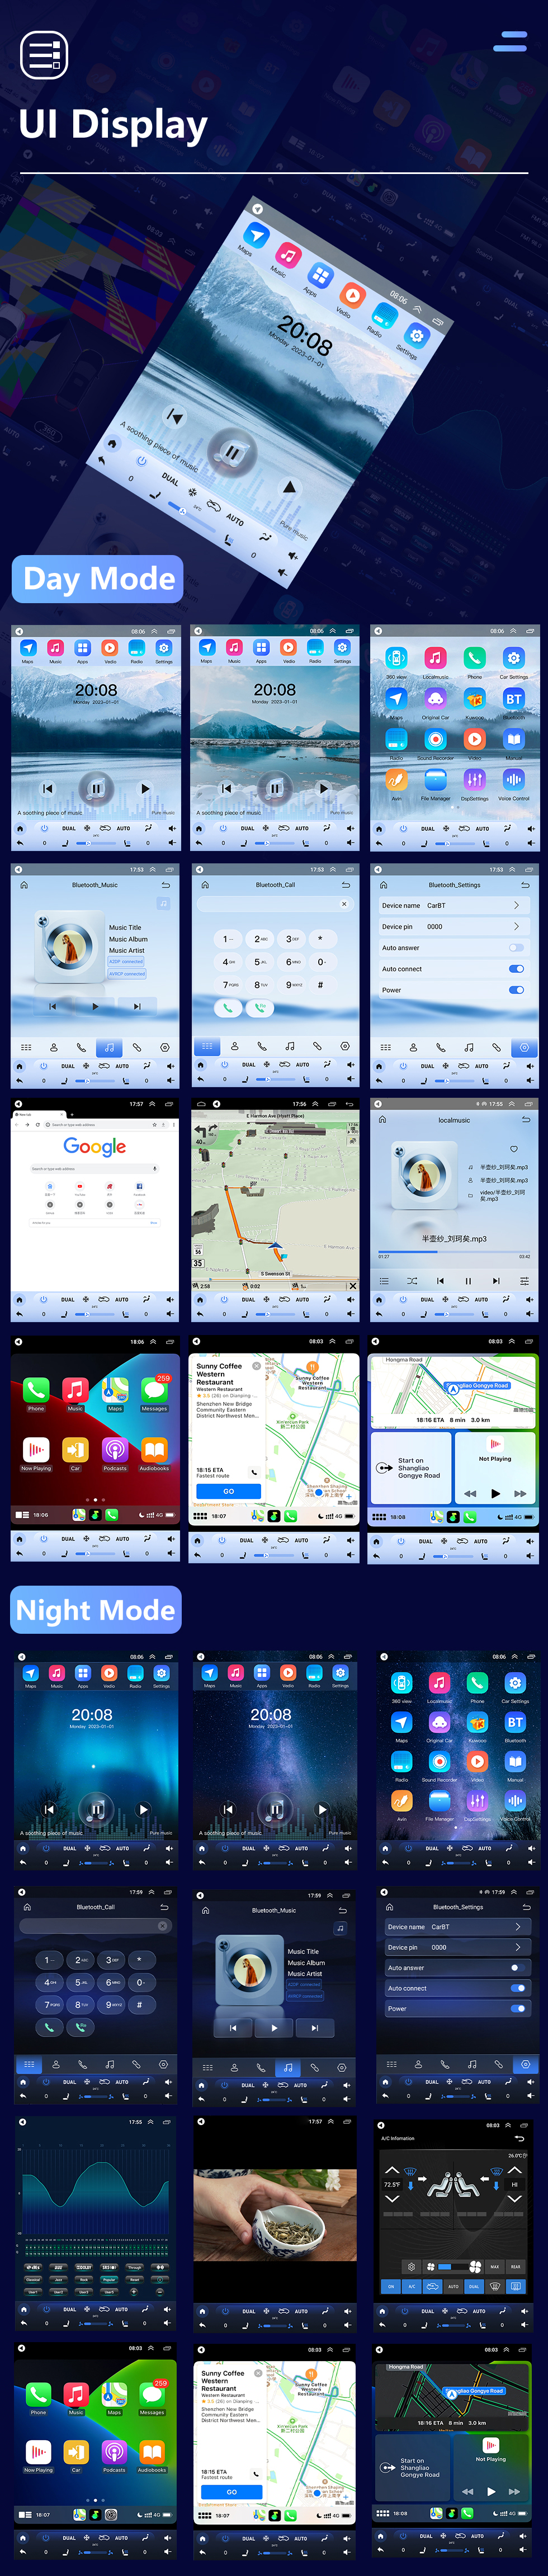 Seicane OEM 9,7 Zoll Android 10.0 2007-2012 Kia Carens Auto A/C GPS Navigationsradio mit Touchscreen Bluetooth USB AUX WIFI Unterstützung TPMS Digital TV Carplay